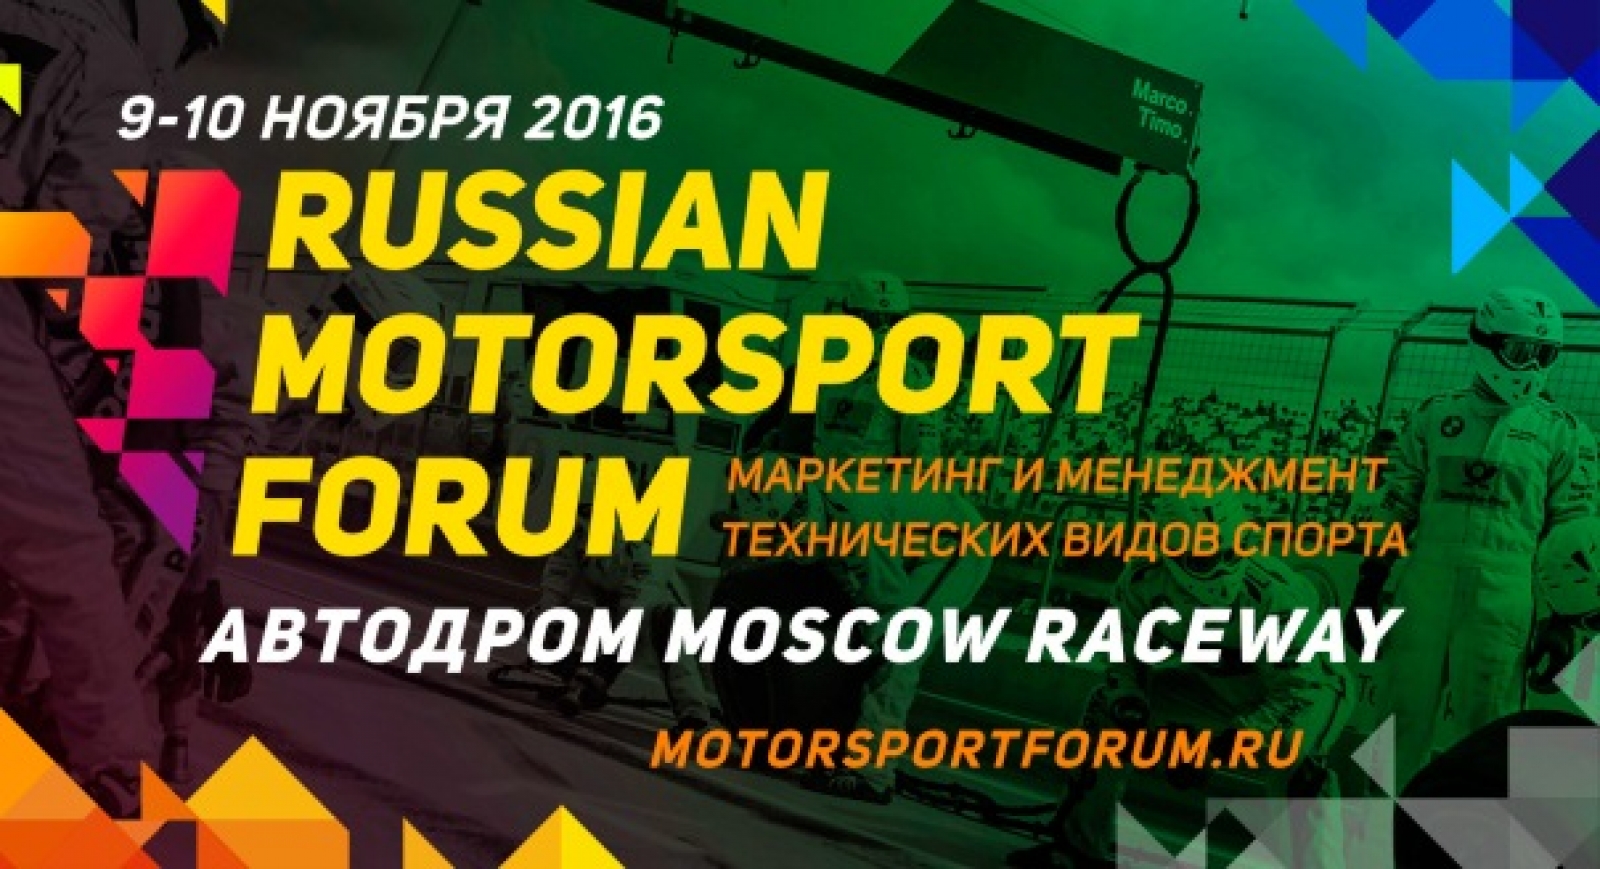 Russian Motorsport Forum на Moscow Raceway